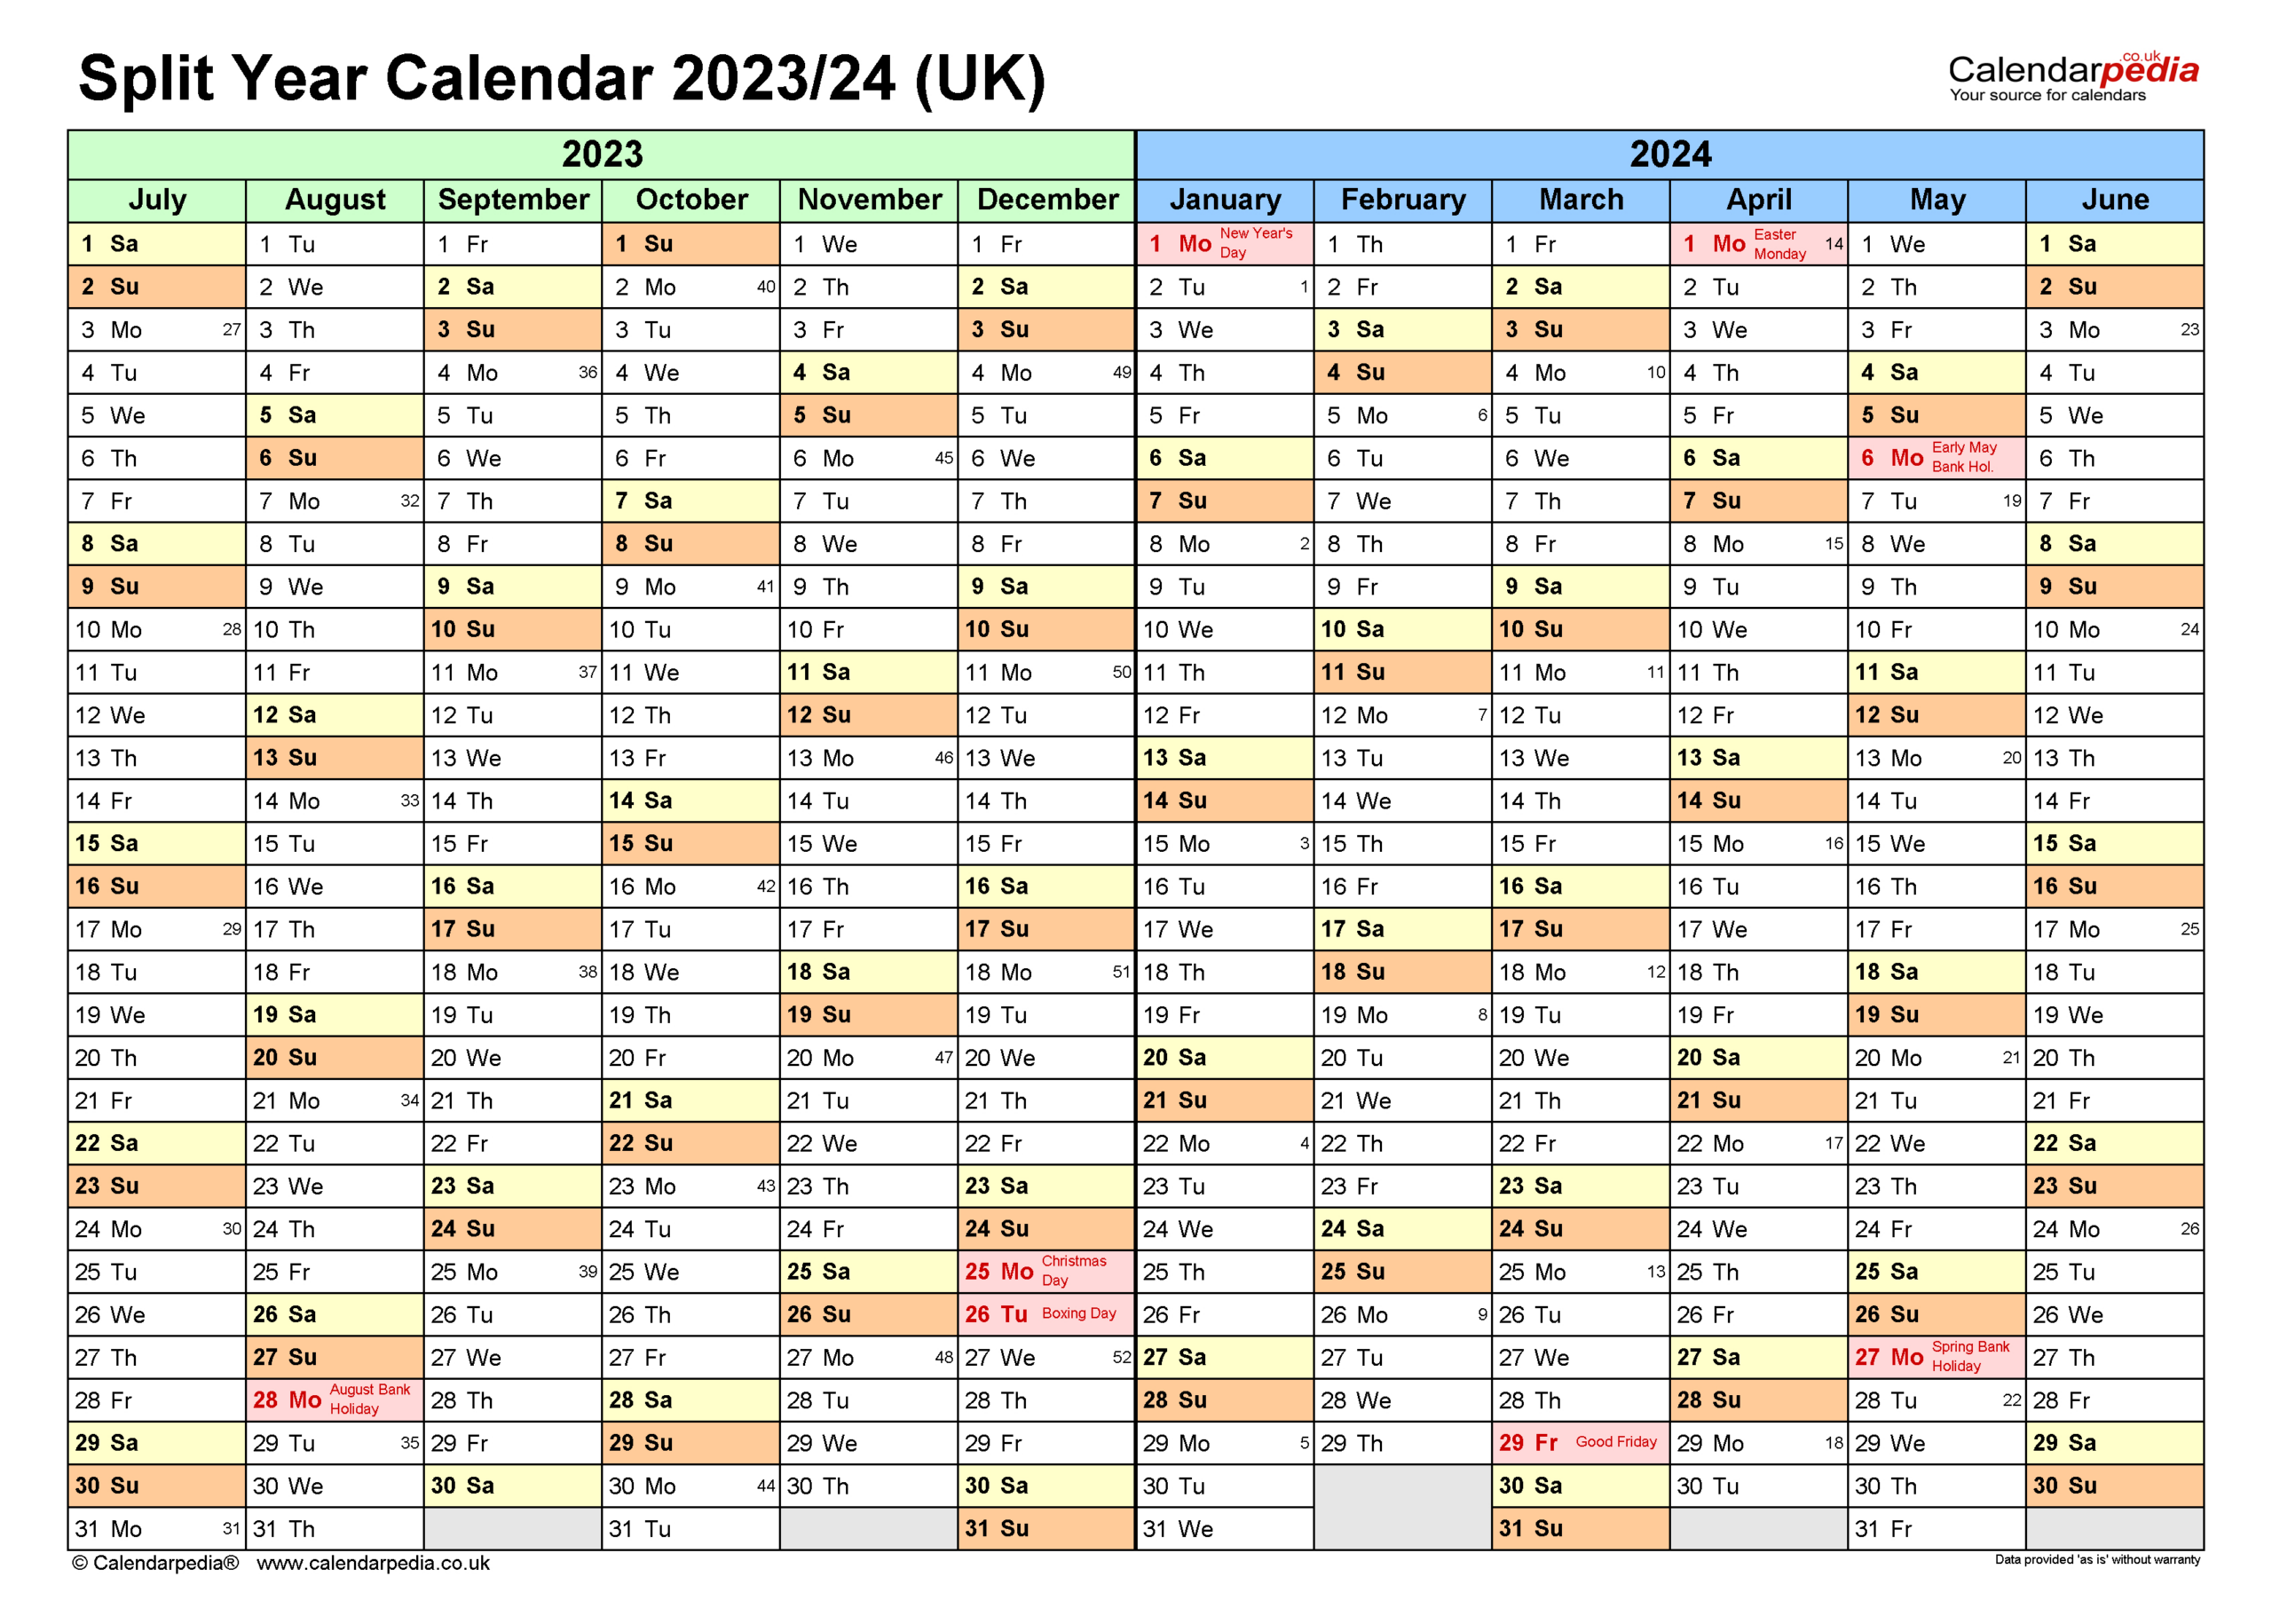 Split Year Calendars 2023/24 Uk (July To June) For Pdf | Printable Calendar September 2023 To August 2024